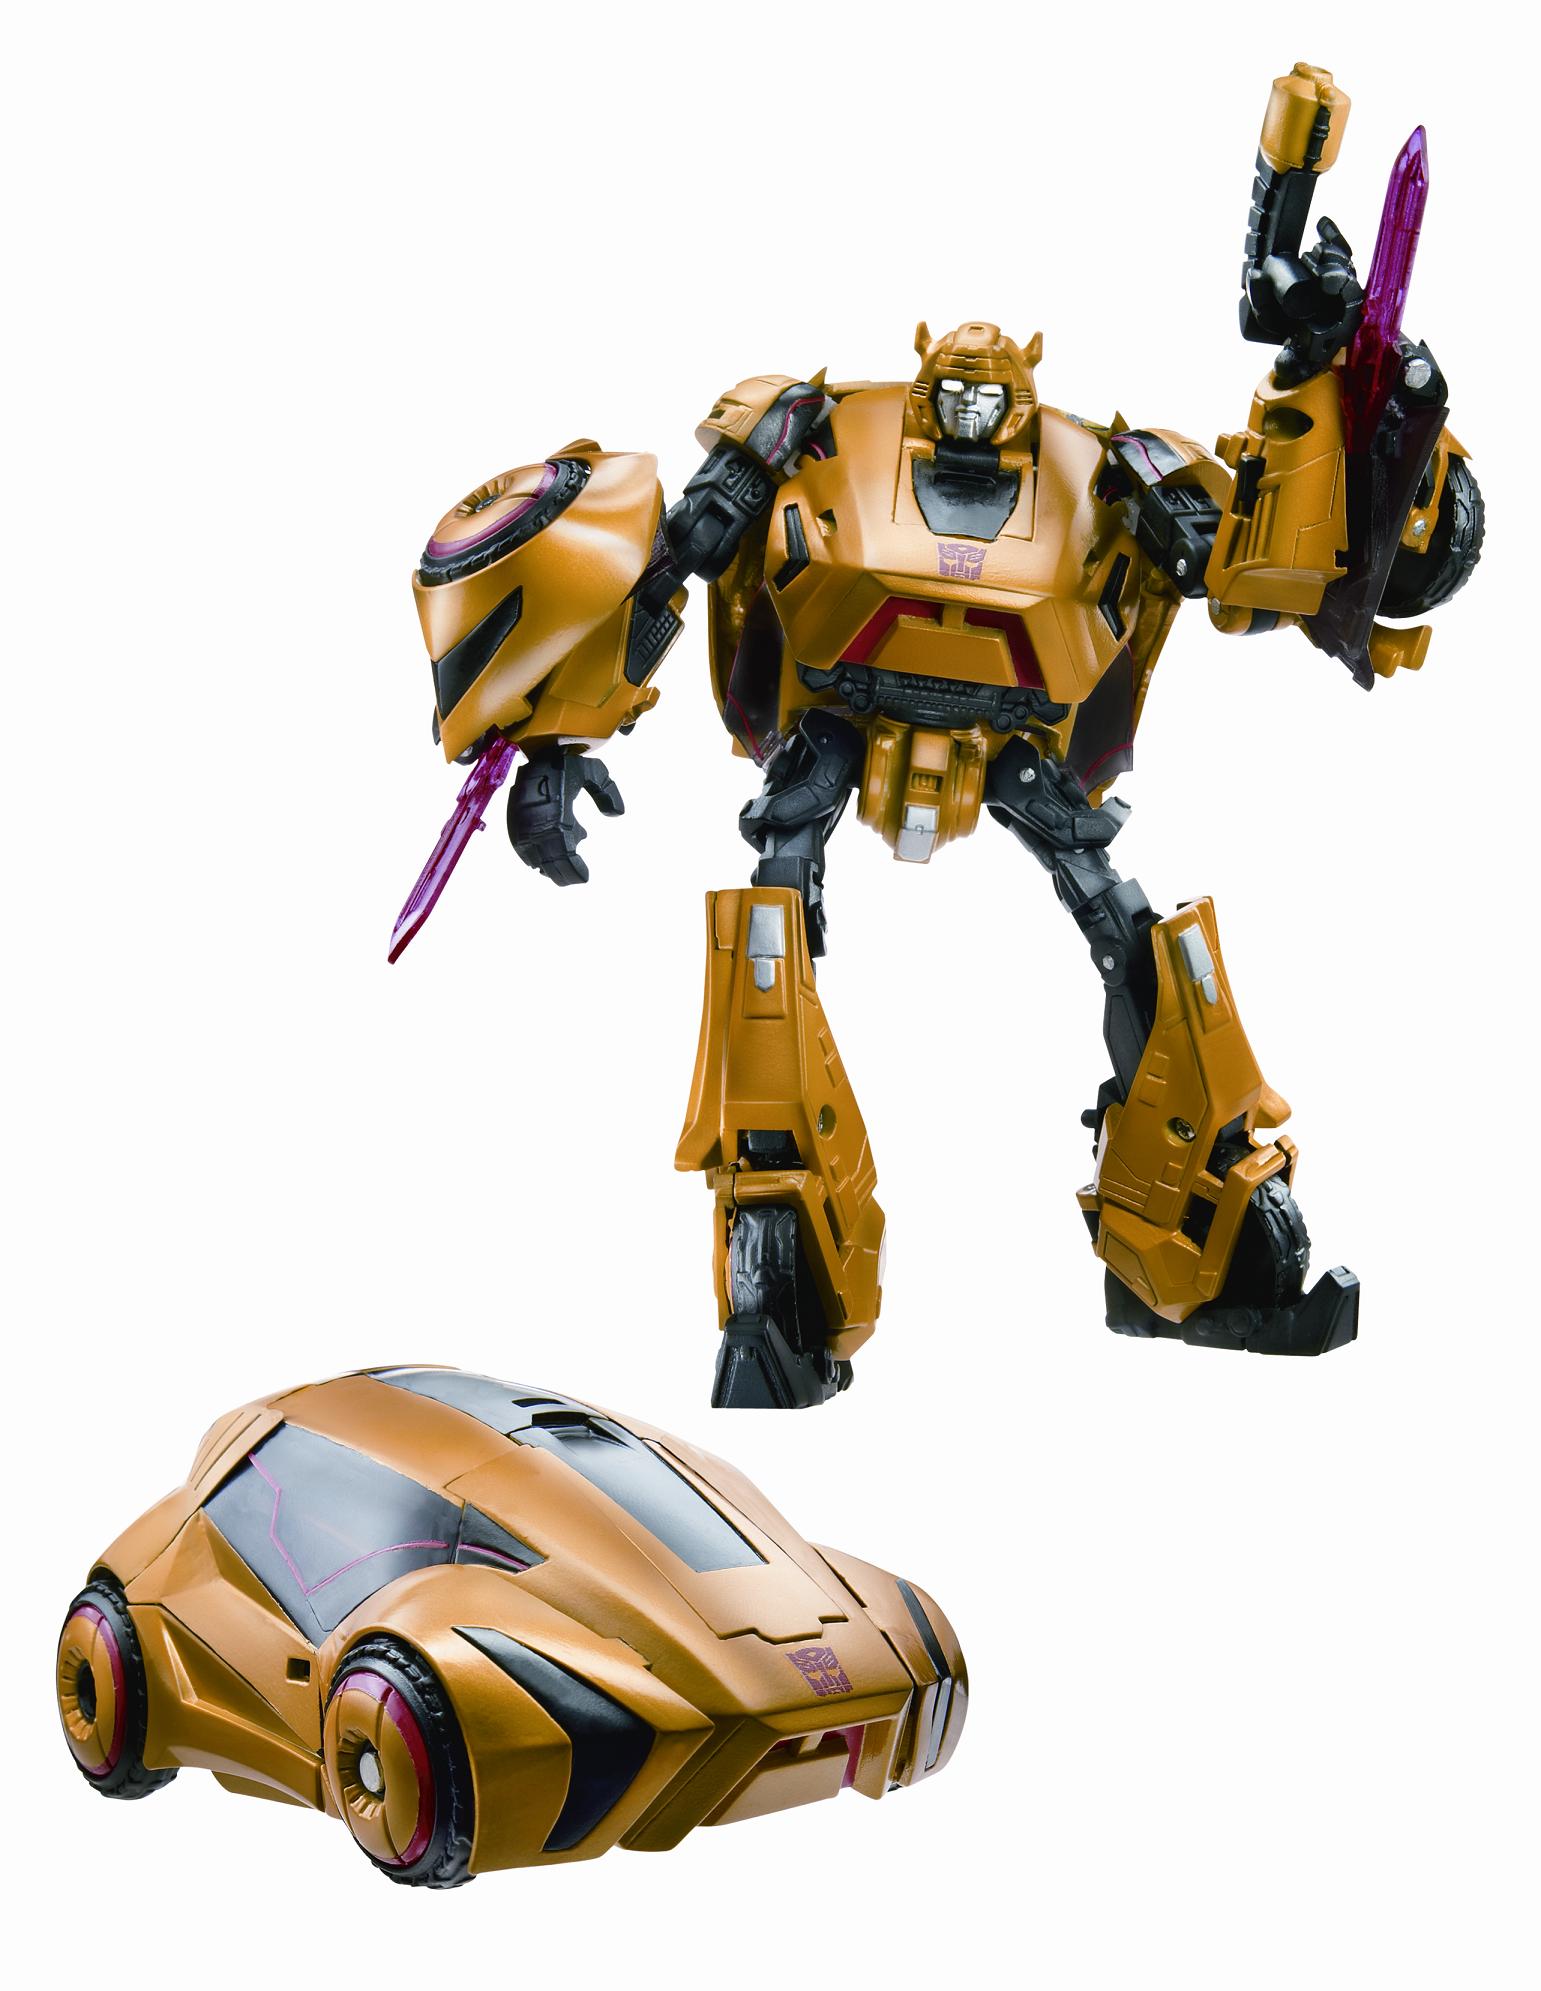 Pre transformer. Transformers Бамблби игрушка. Transformers Generation Бамблби. Трансформеры Прайм 2010 игрушка Бамблби. Трансформеры 3 Бамблби игрушки.